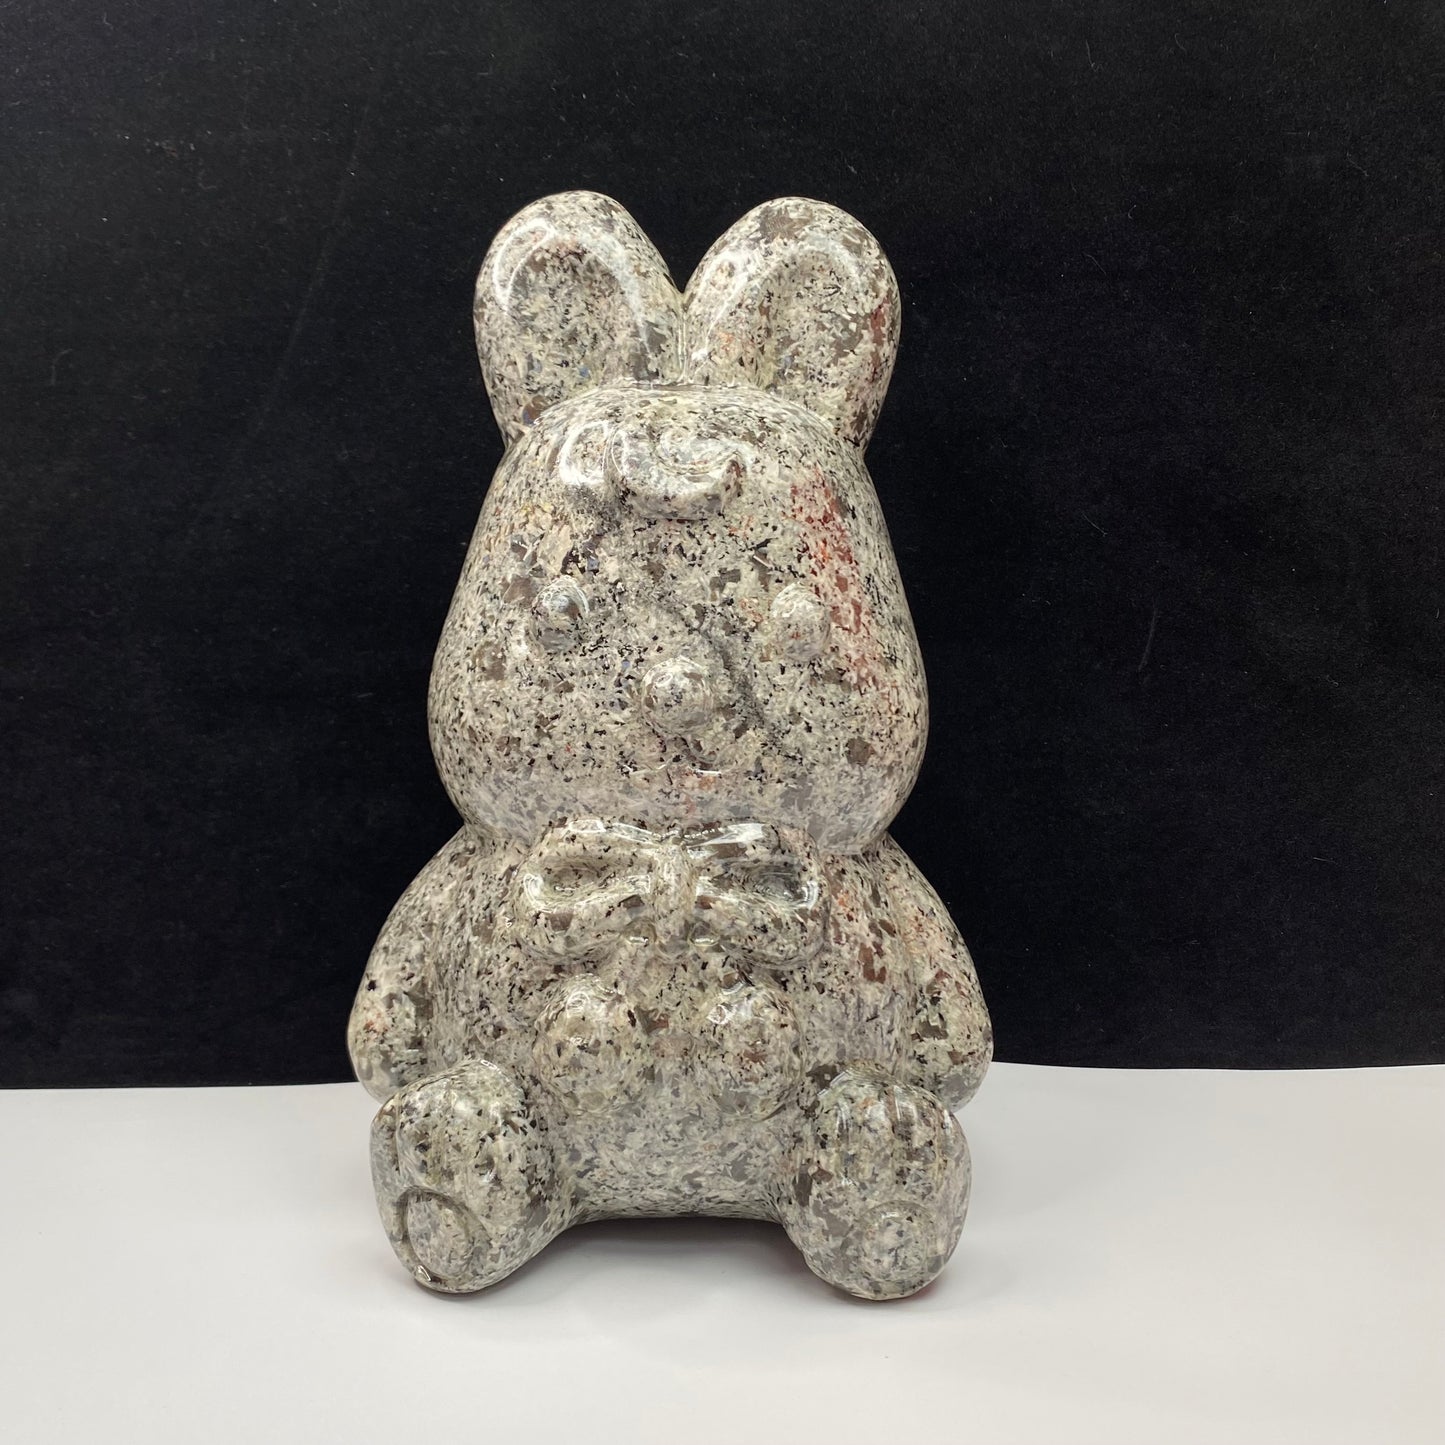 511-Large Carving Yooperlite moon on head cartoon cute bunny rabbit